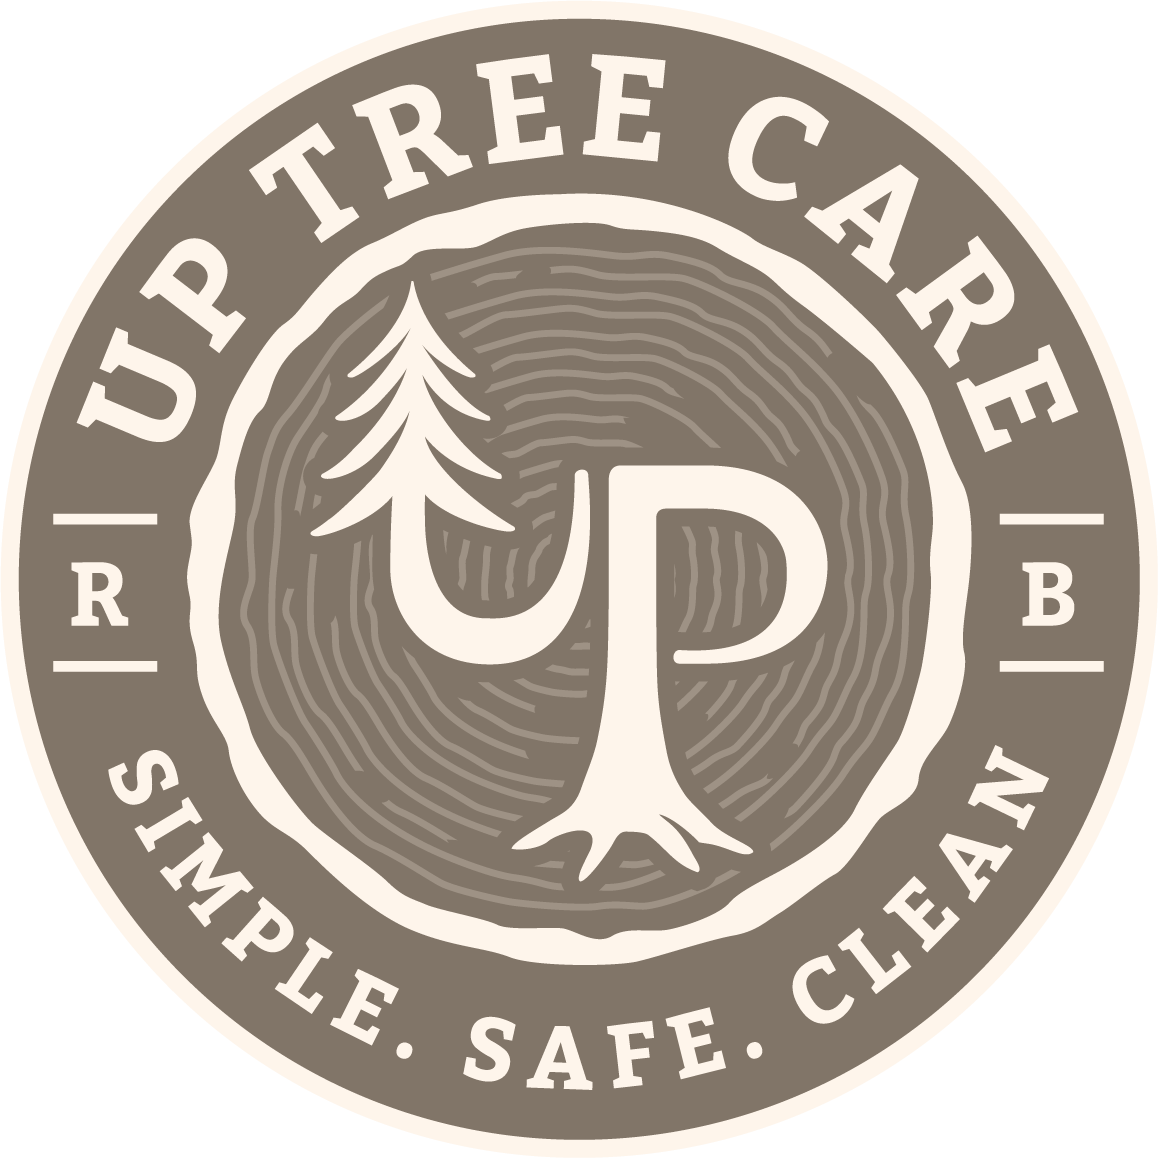 Up Tree Care